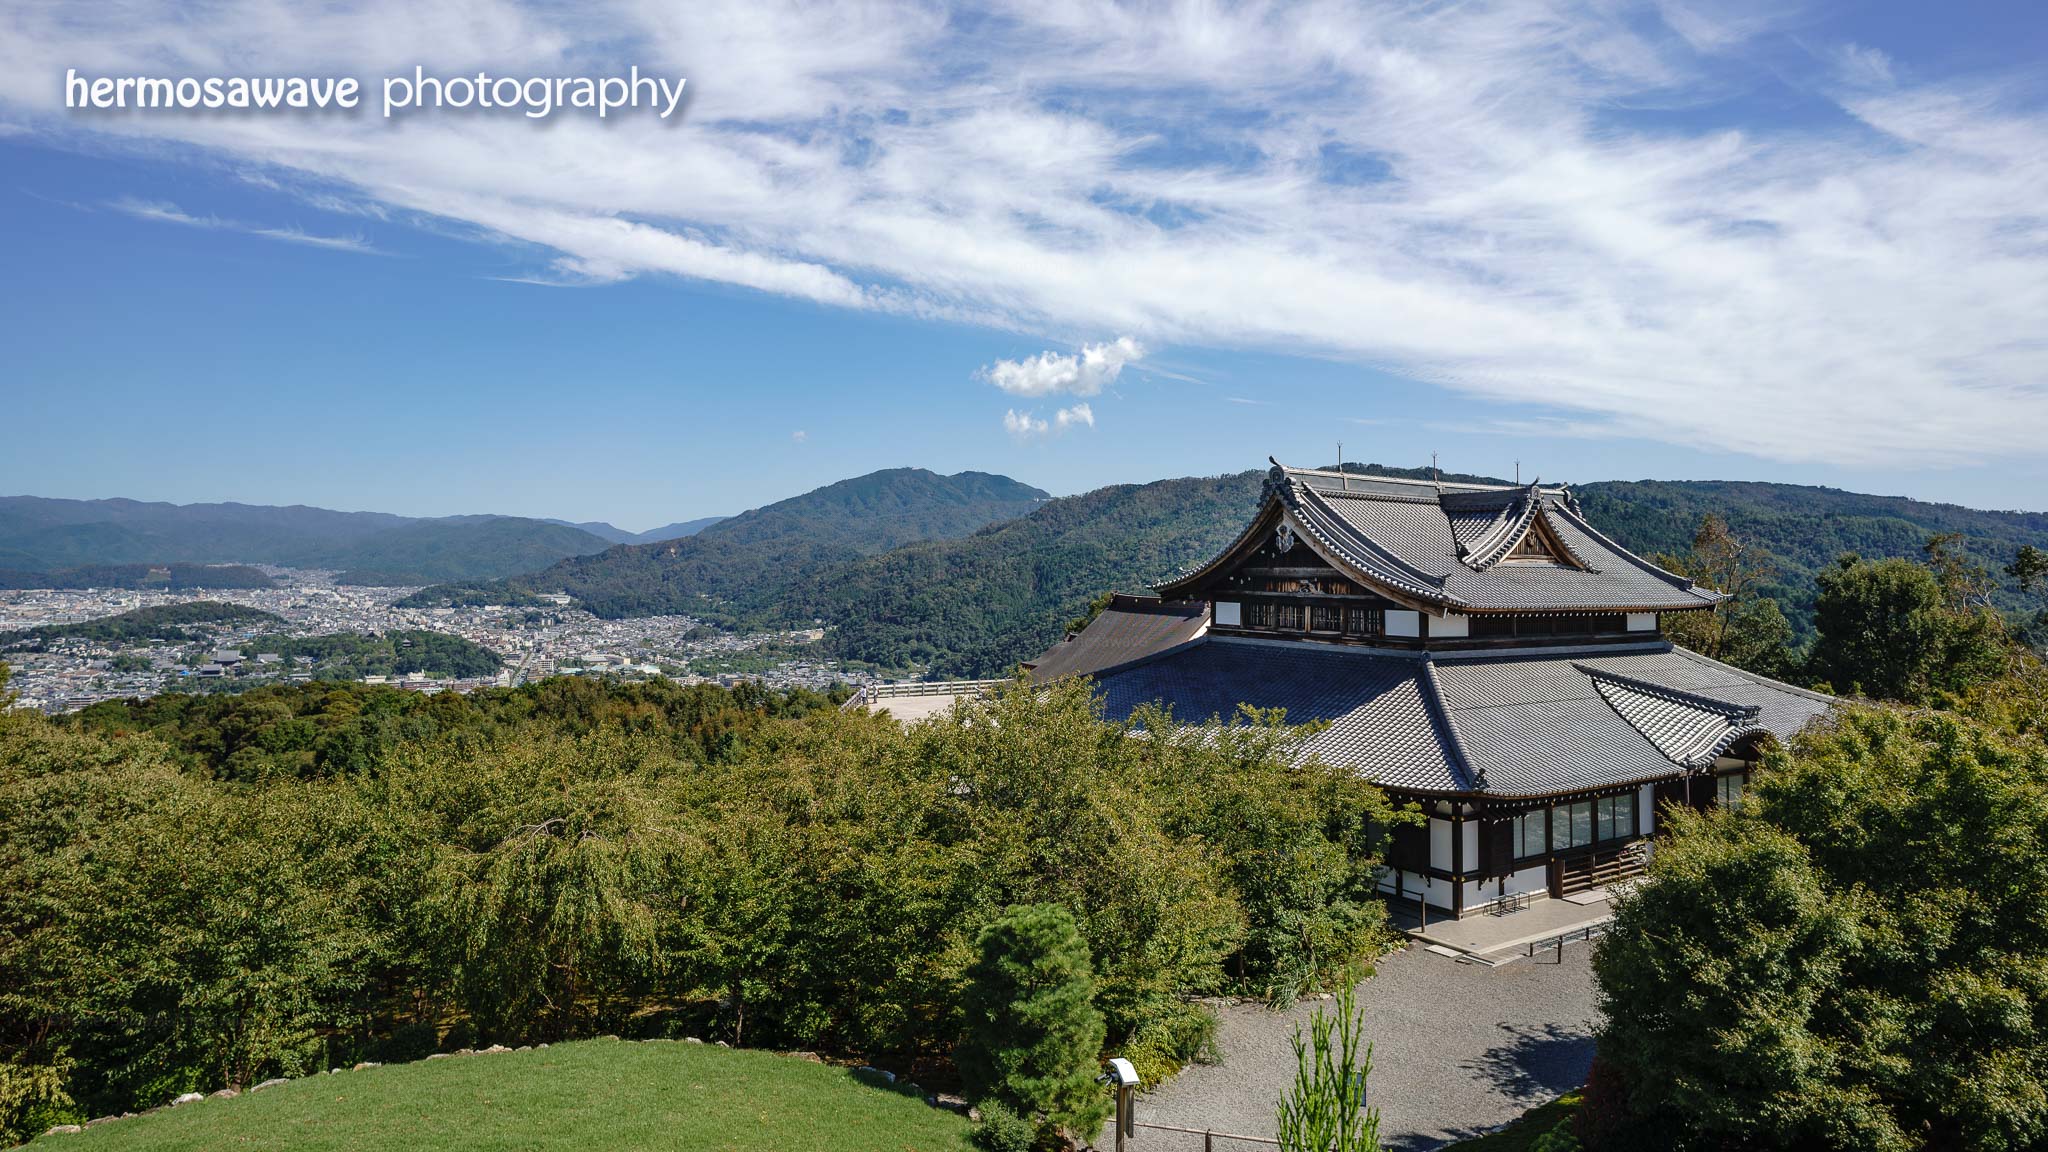 View from Shogun-zuka